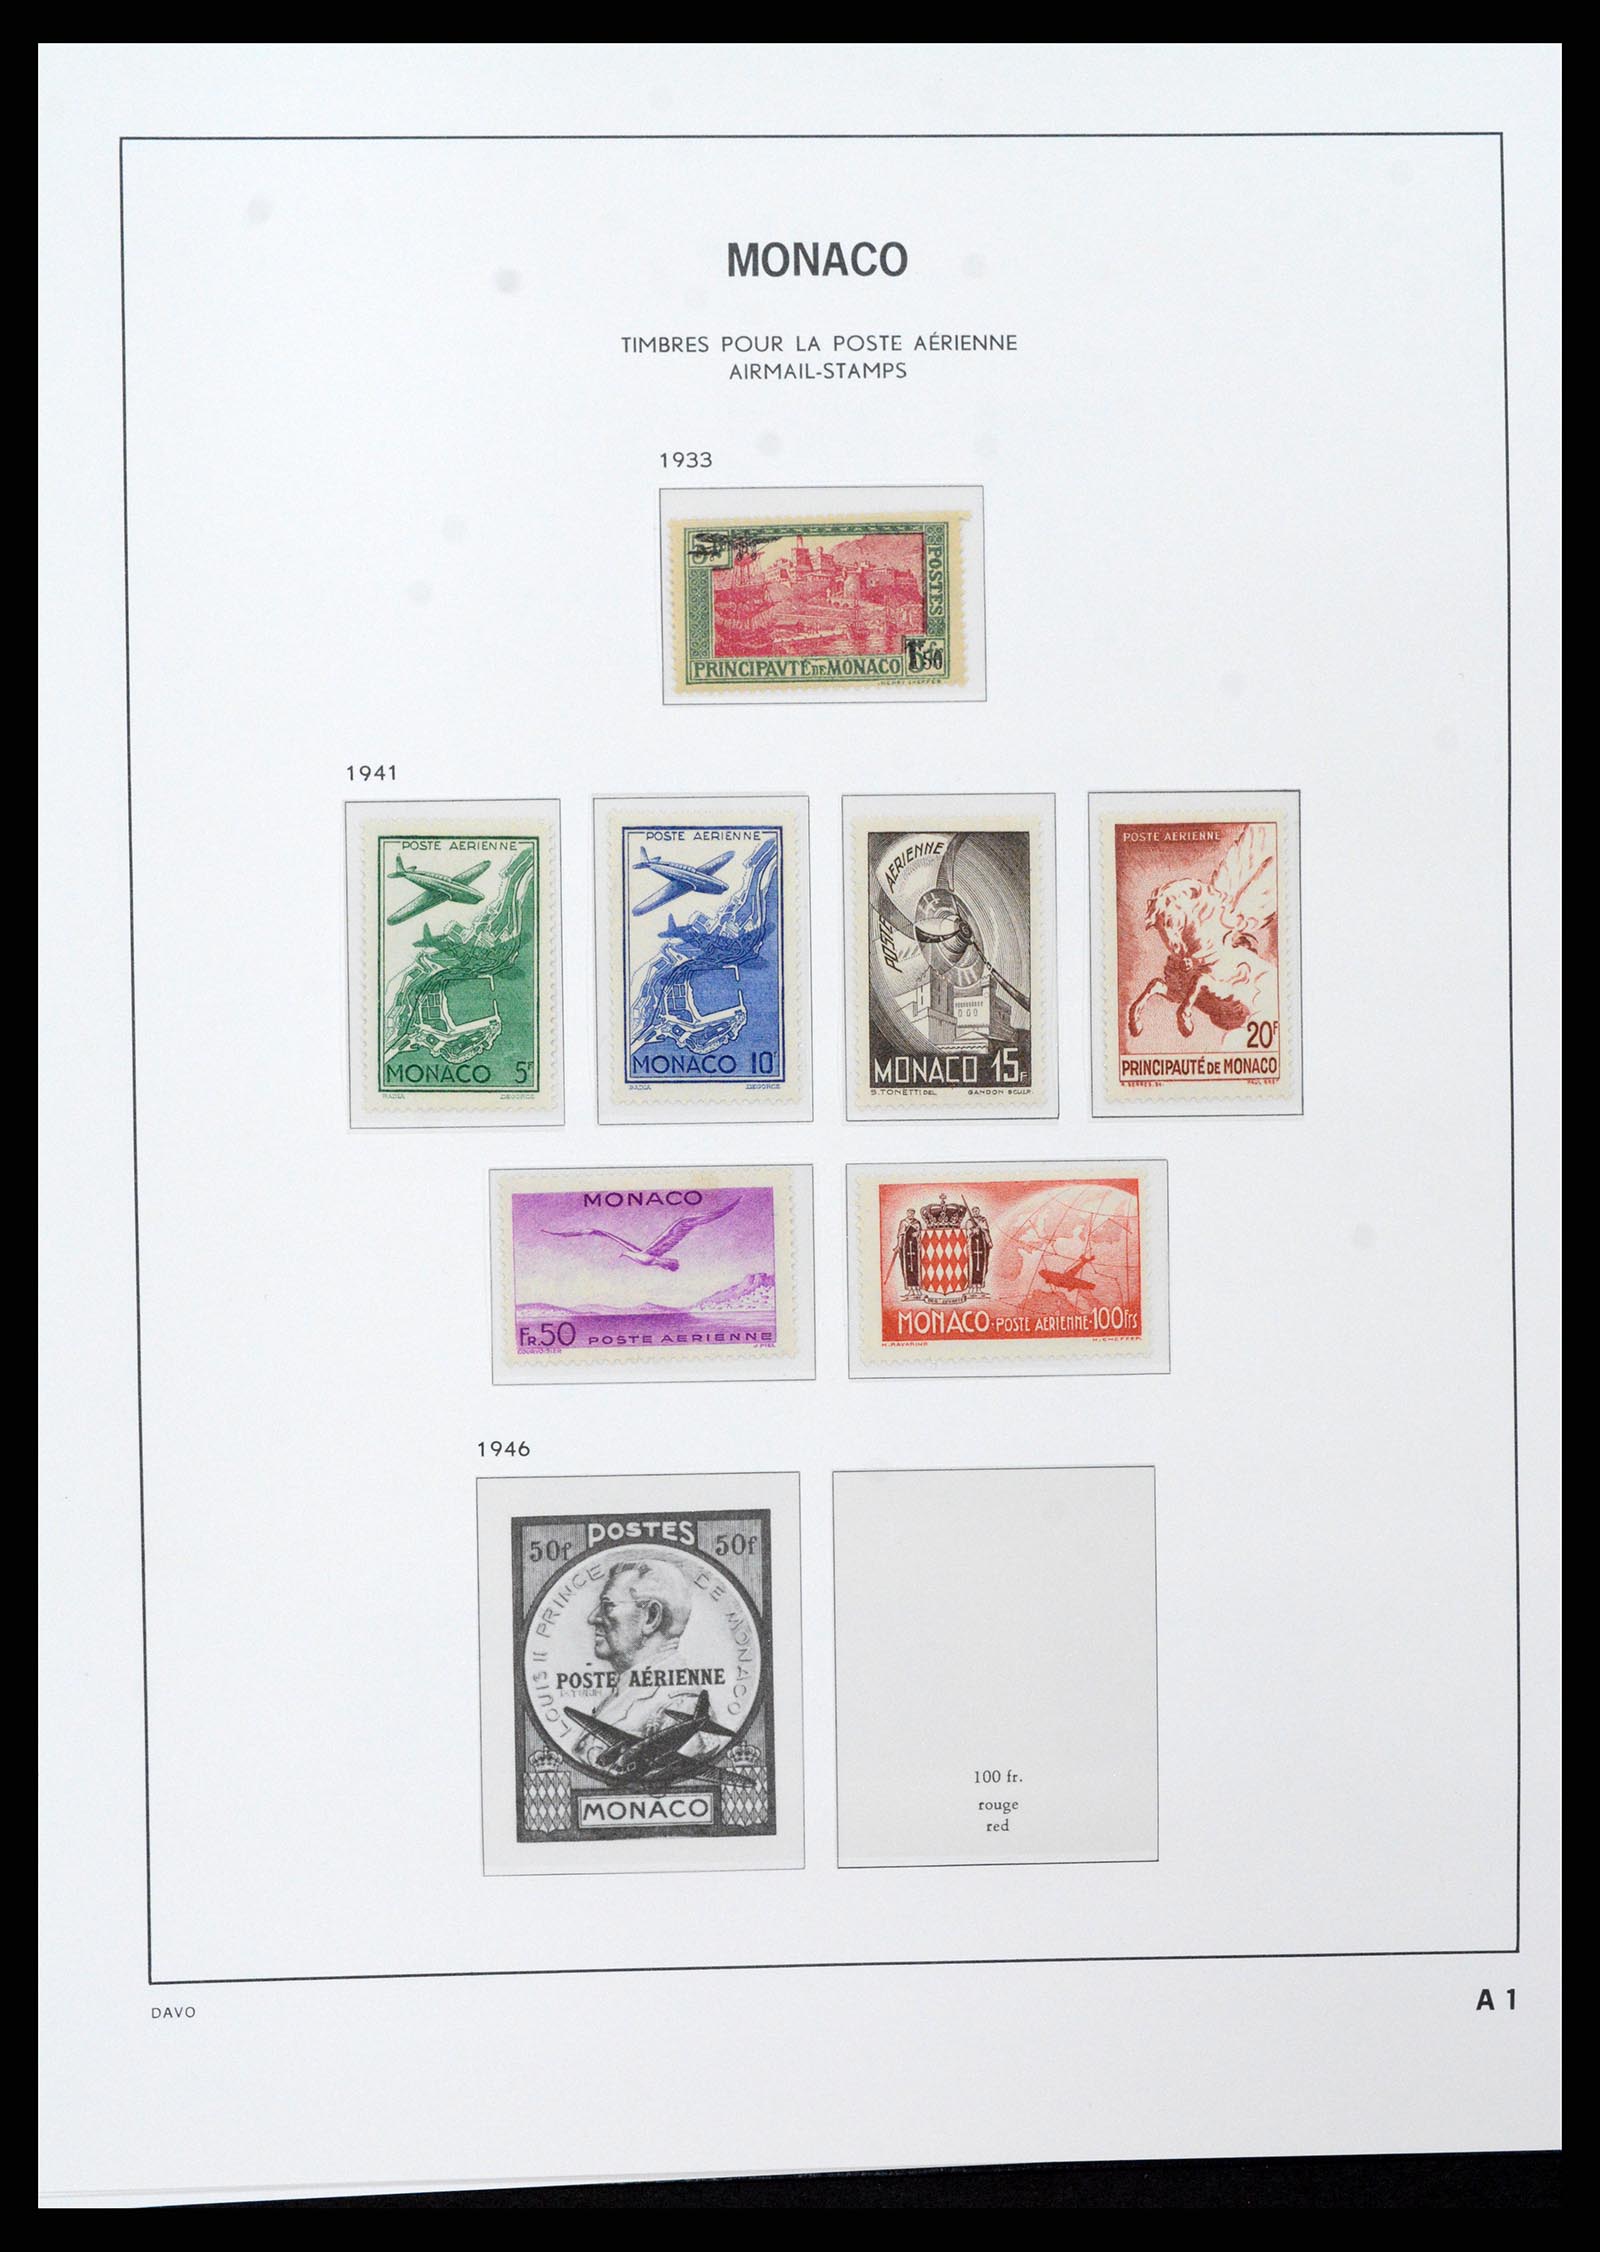 37279 058 - Stamp collection 37279 Monaco 1885-1969.